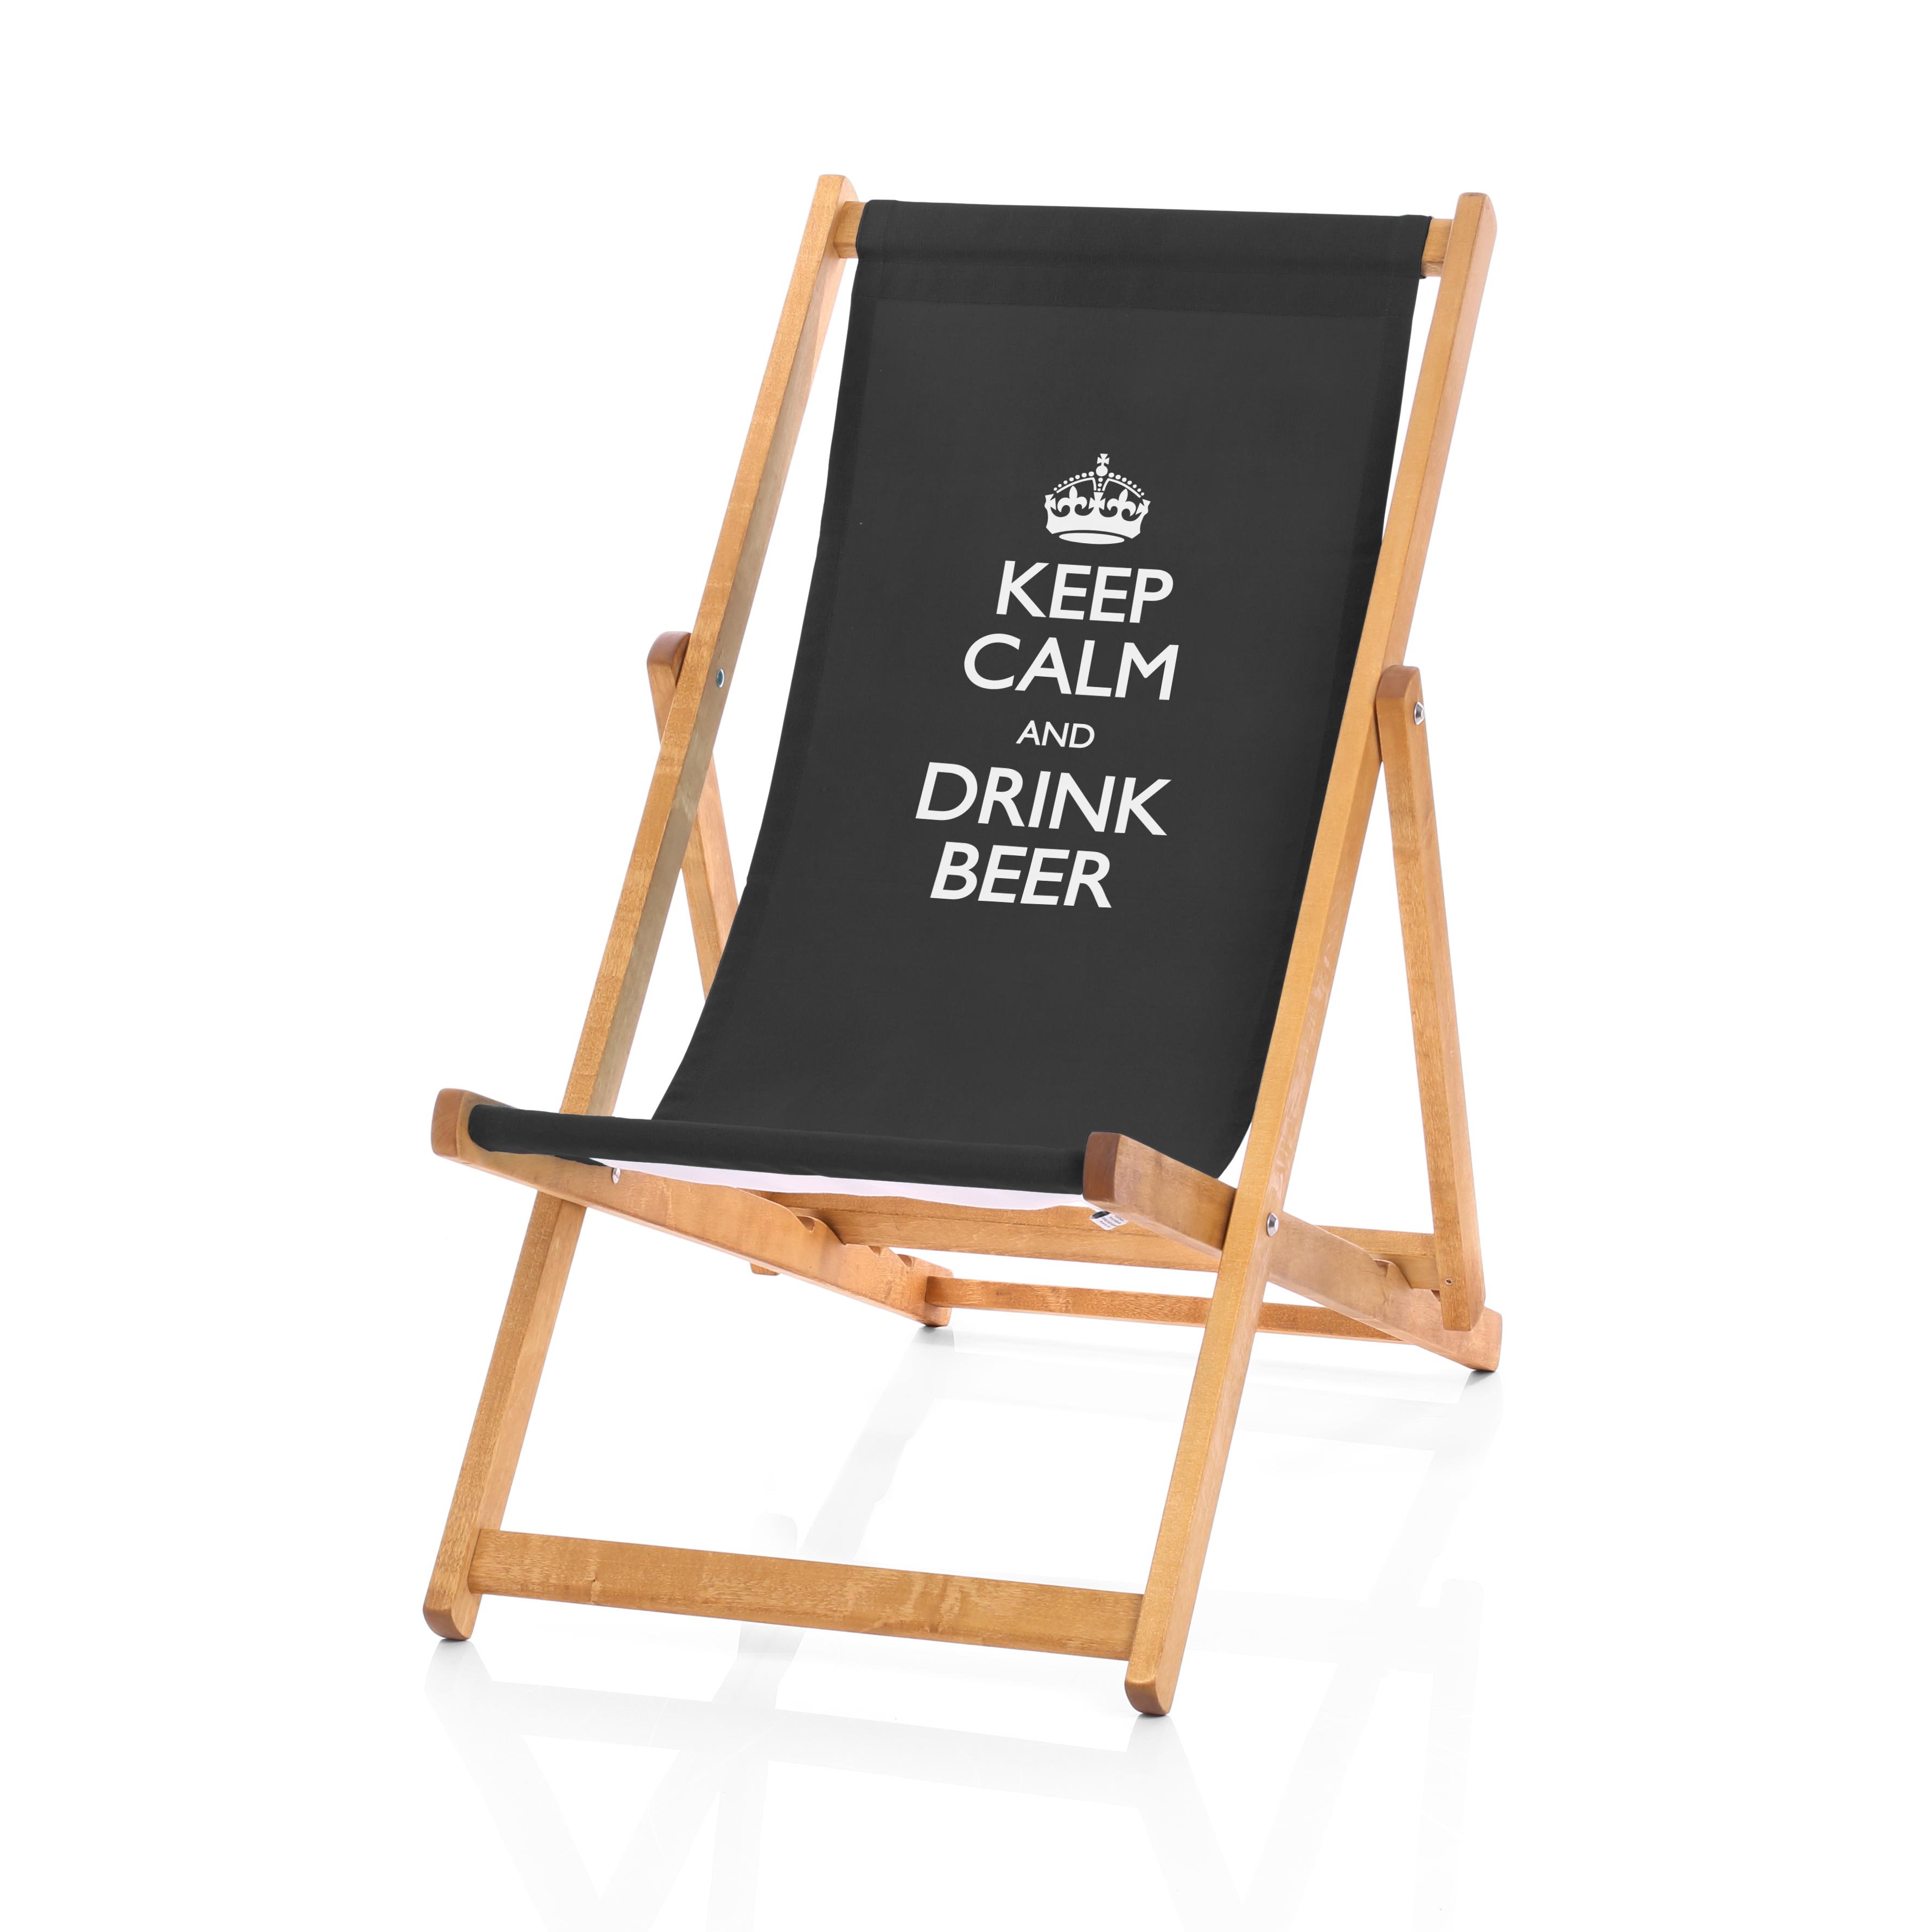 Hardwood Deckchairs - Keep Calm and Drink Beer